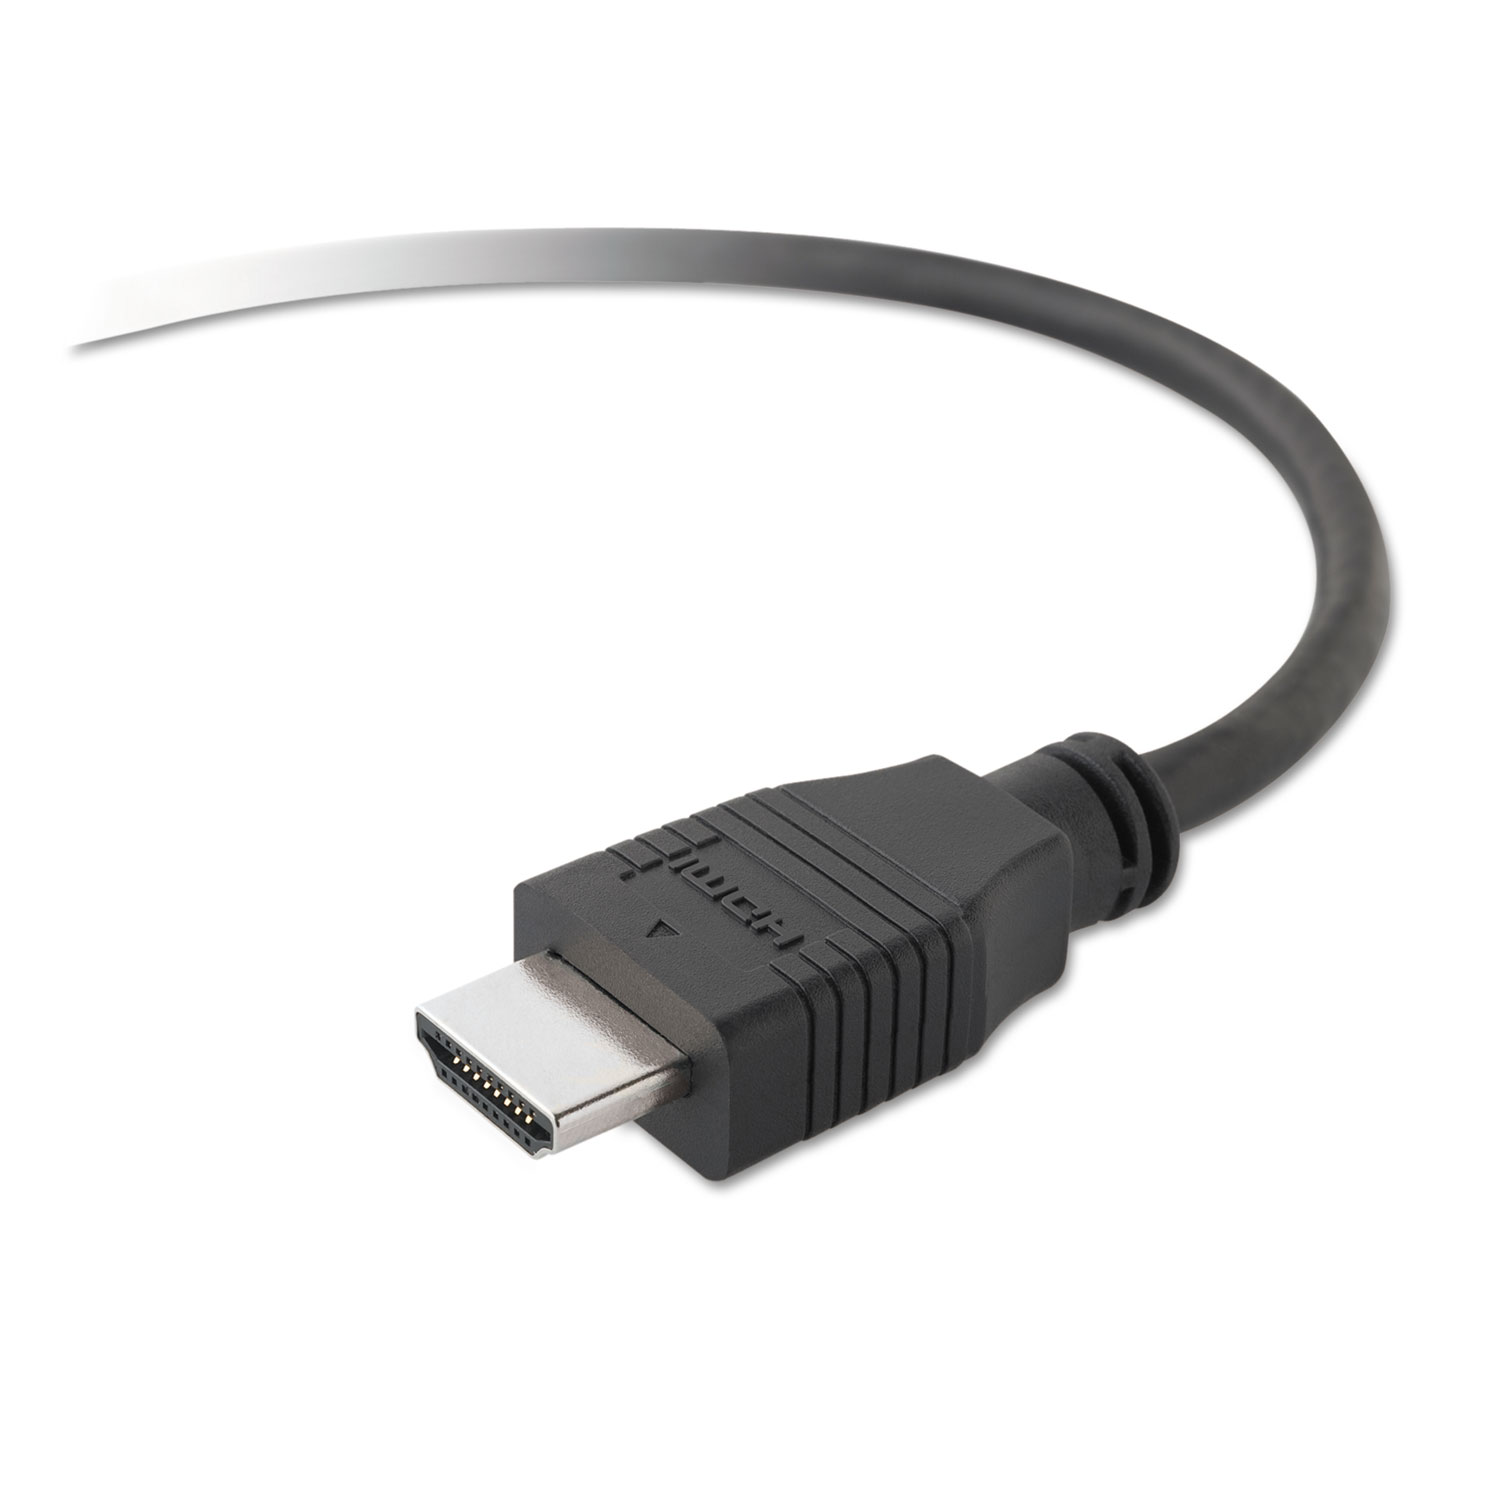  Belkin F8V3311B06 HDMI to HDMI Audio/Video Cable, 6 ft., Black (BLKF8V3311B06) 